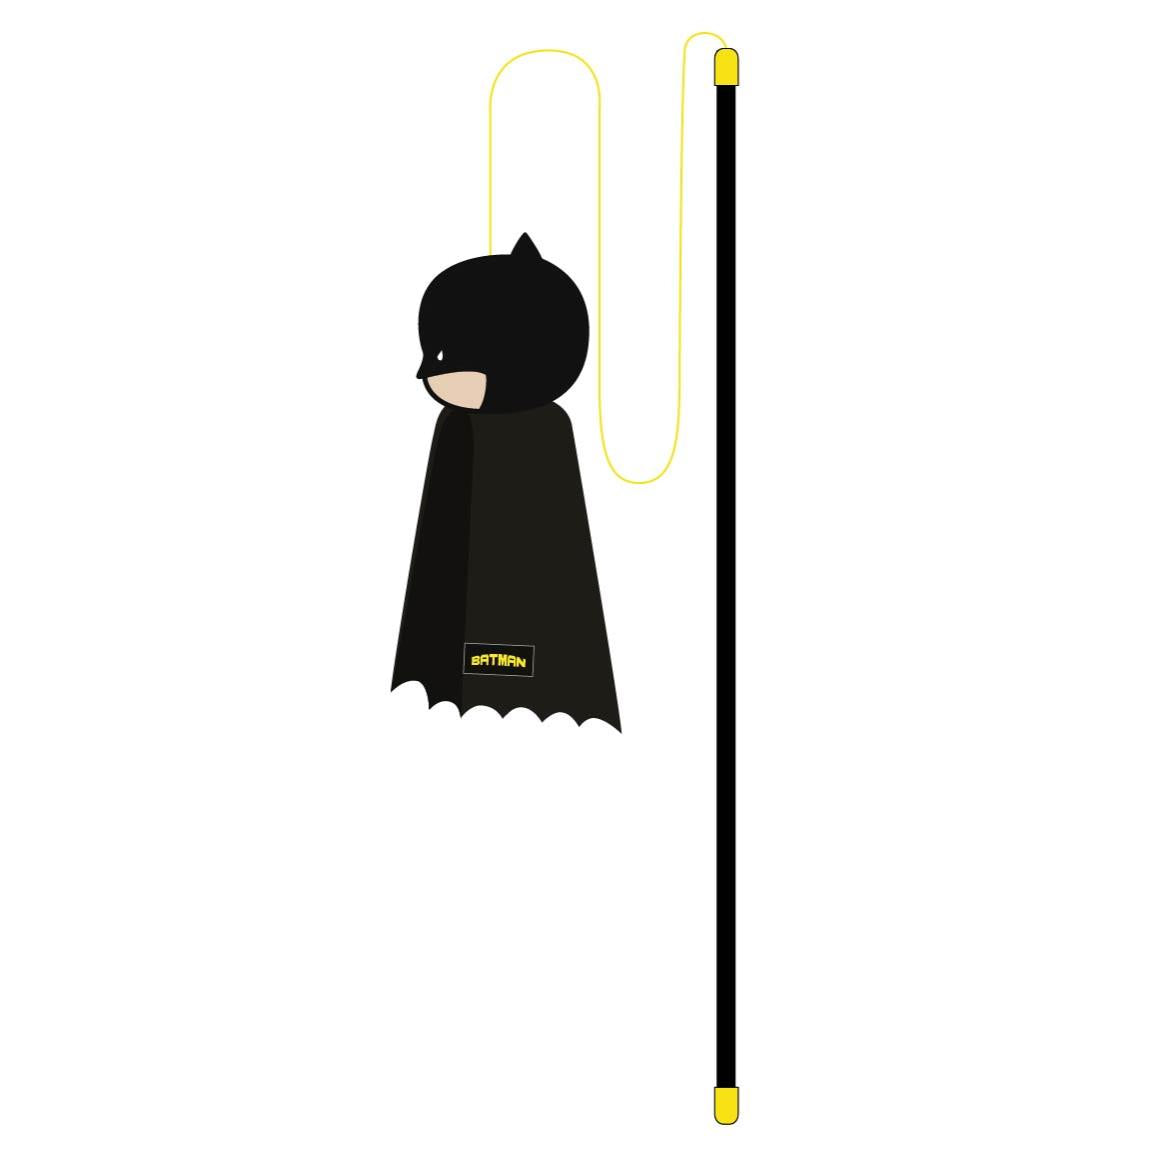 Batman Cat Wand Toy